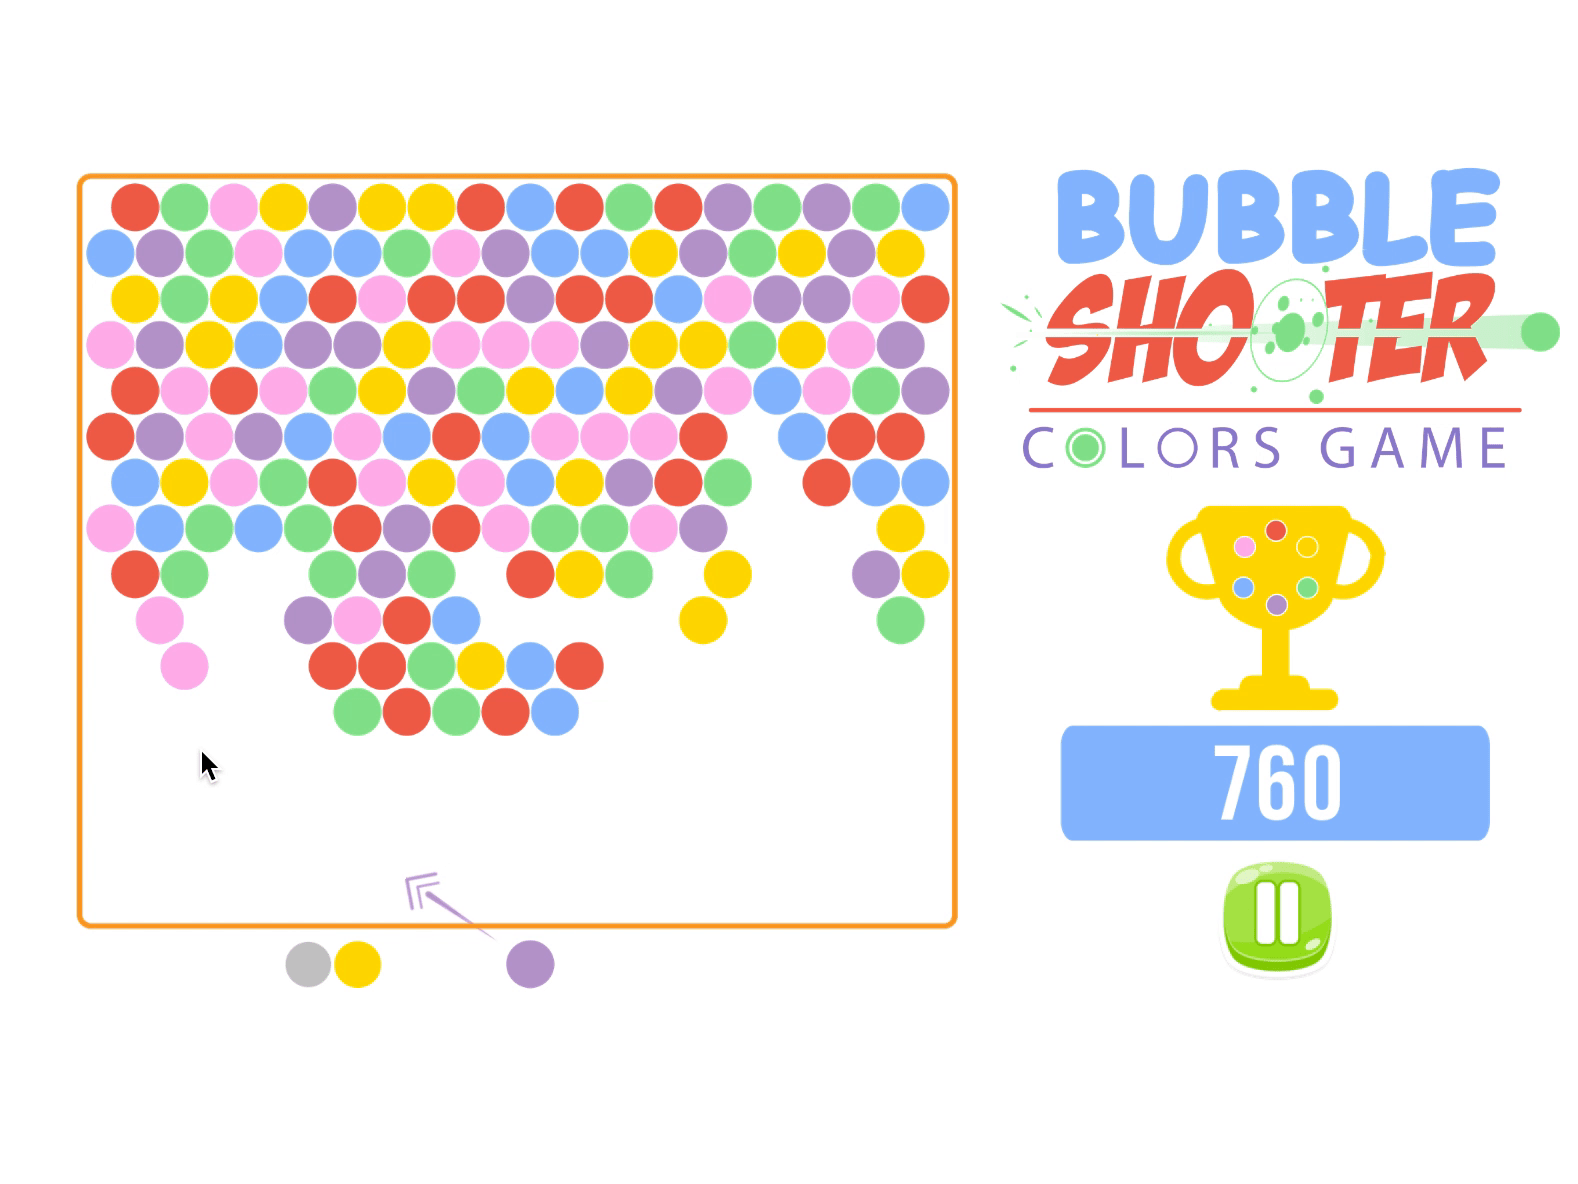 Bubble Shooter Colors Game Screenshot 14